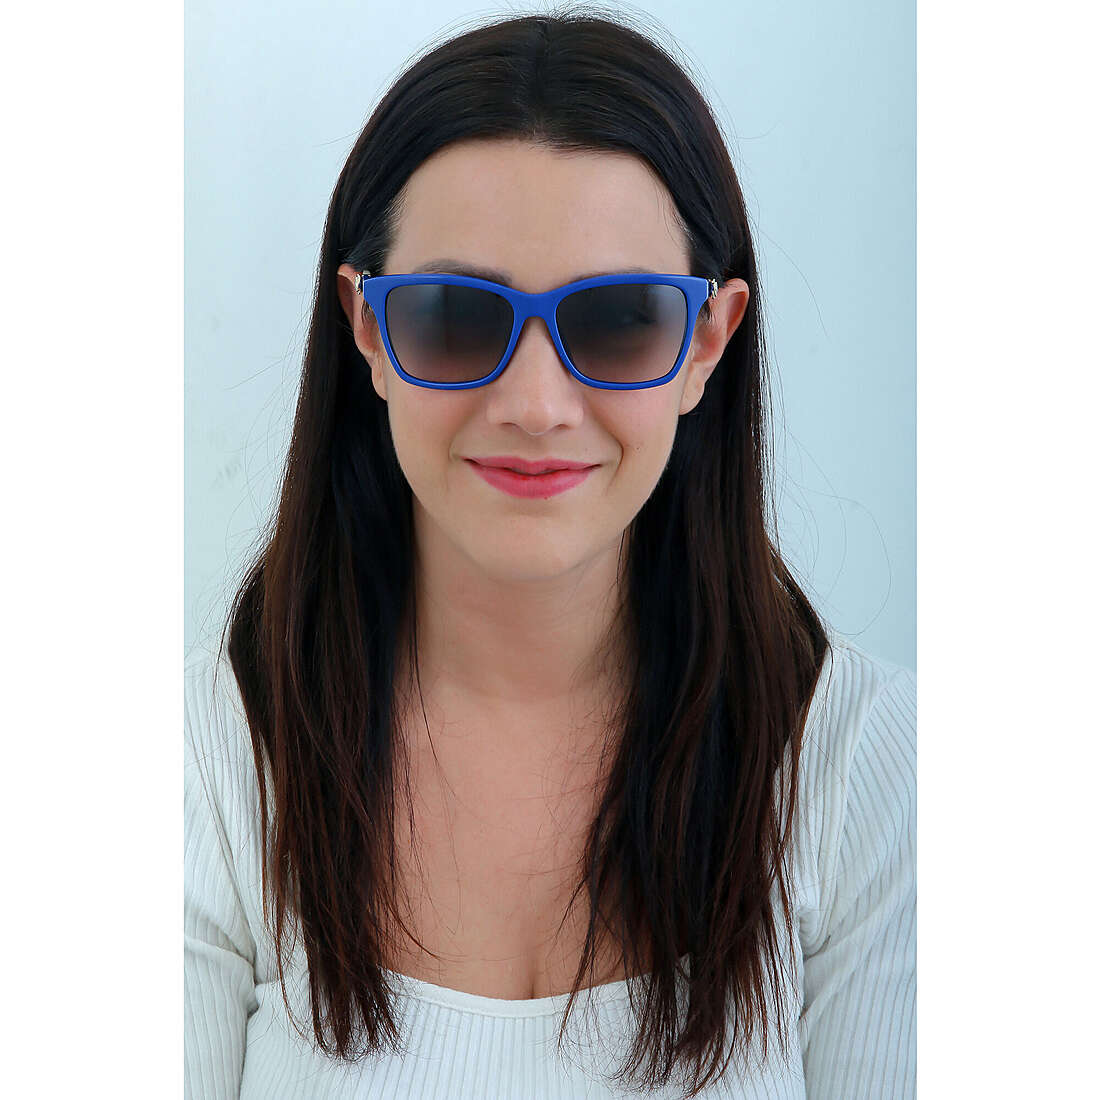 Blumarine occhiali da sole donna SBM651M550D82 indosso